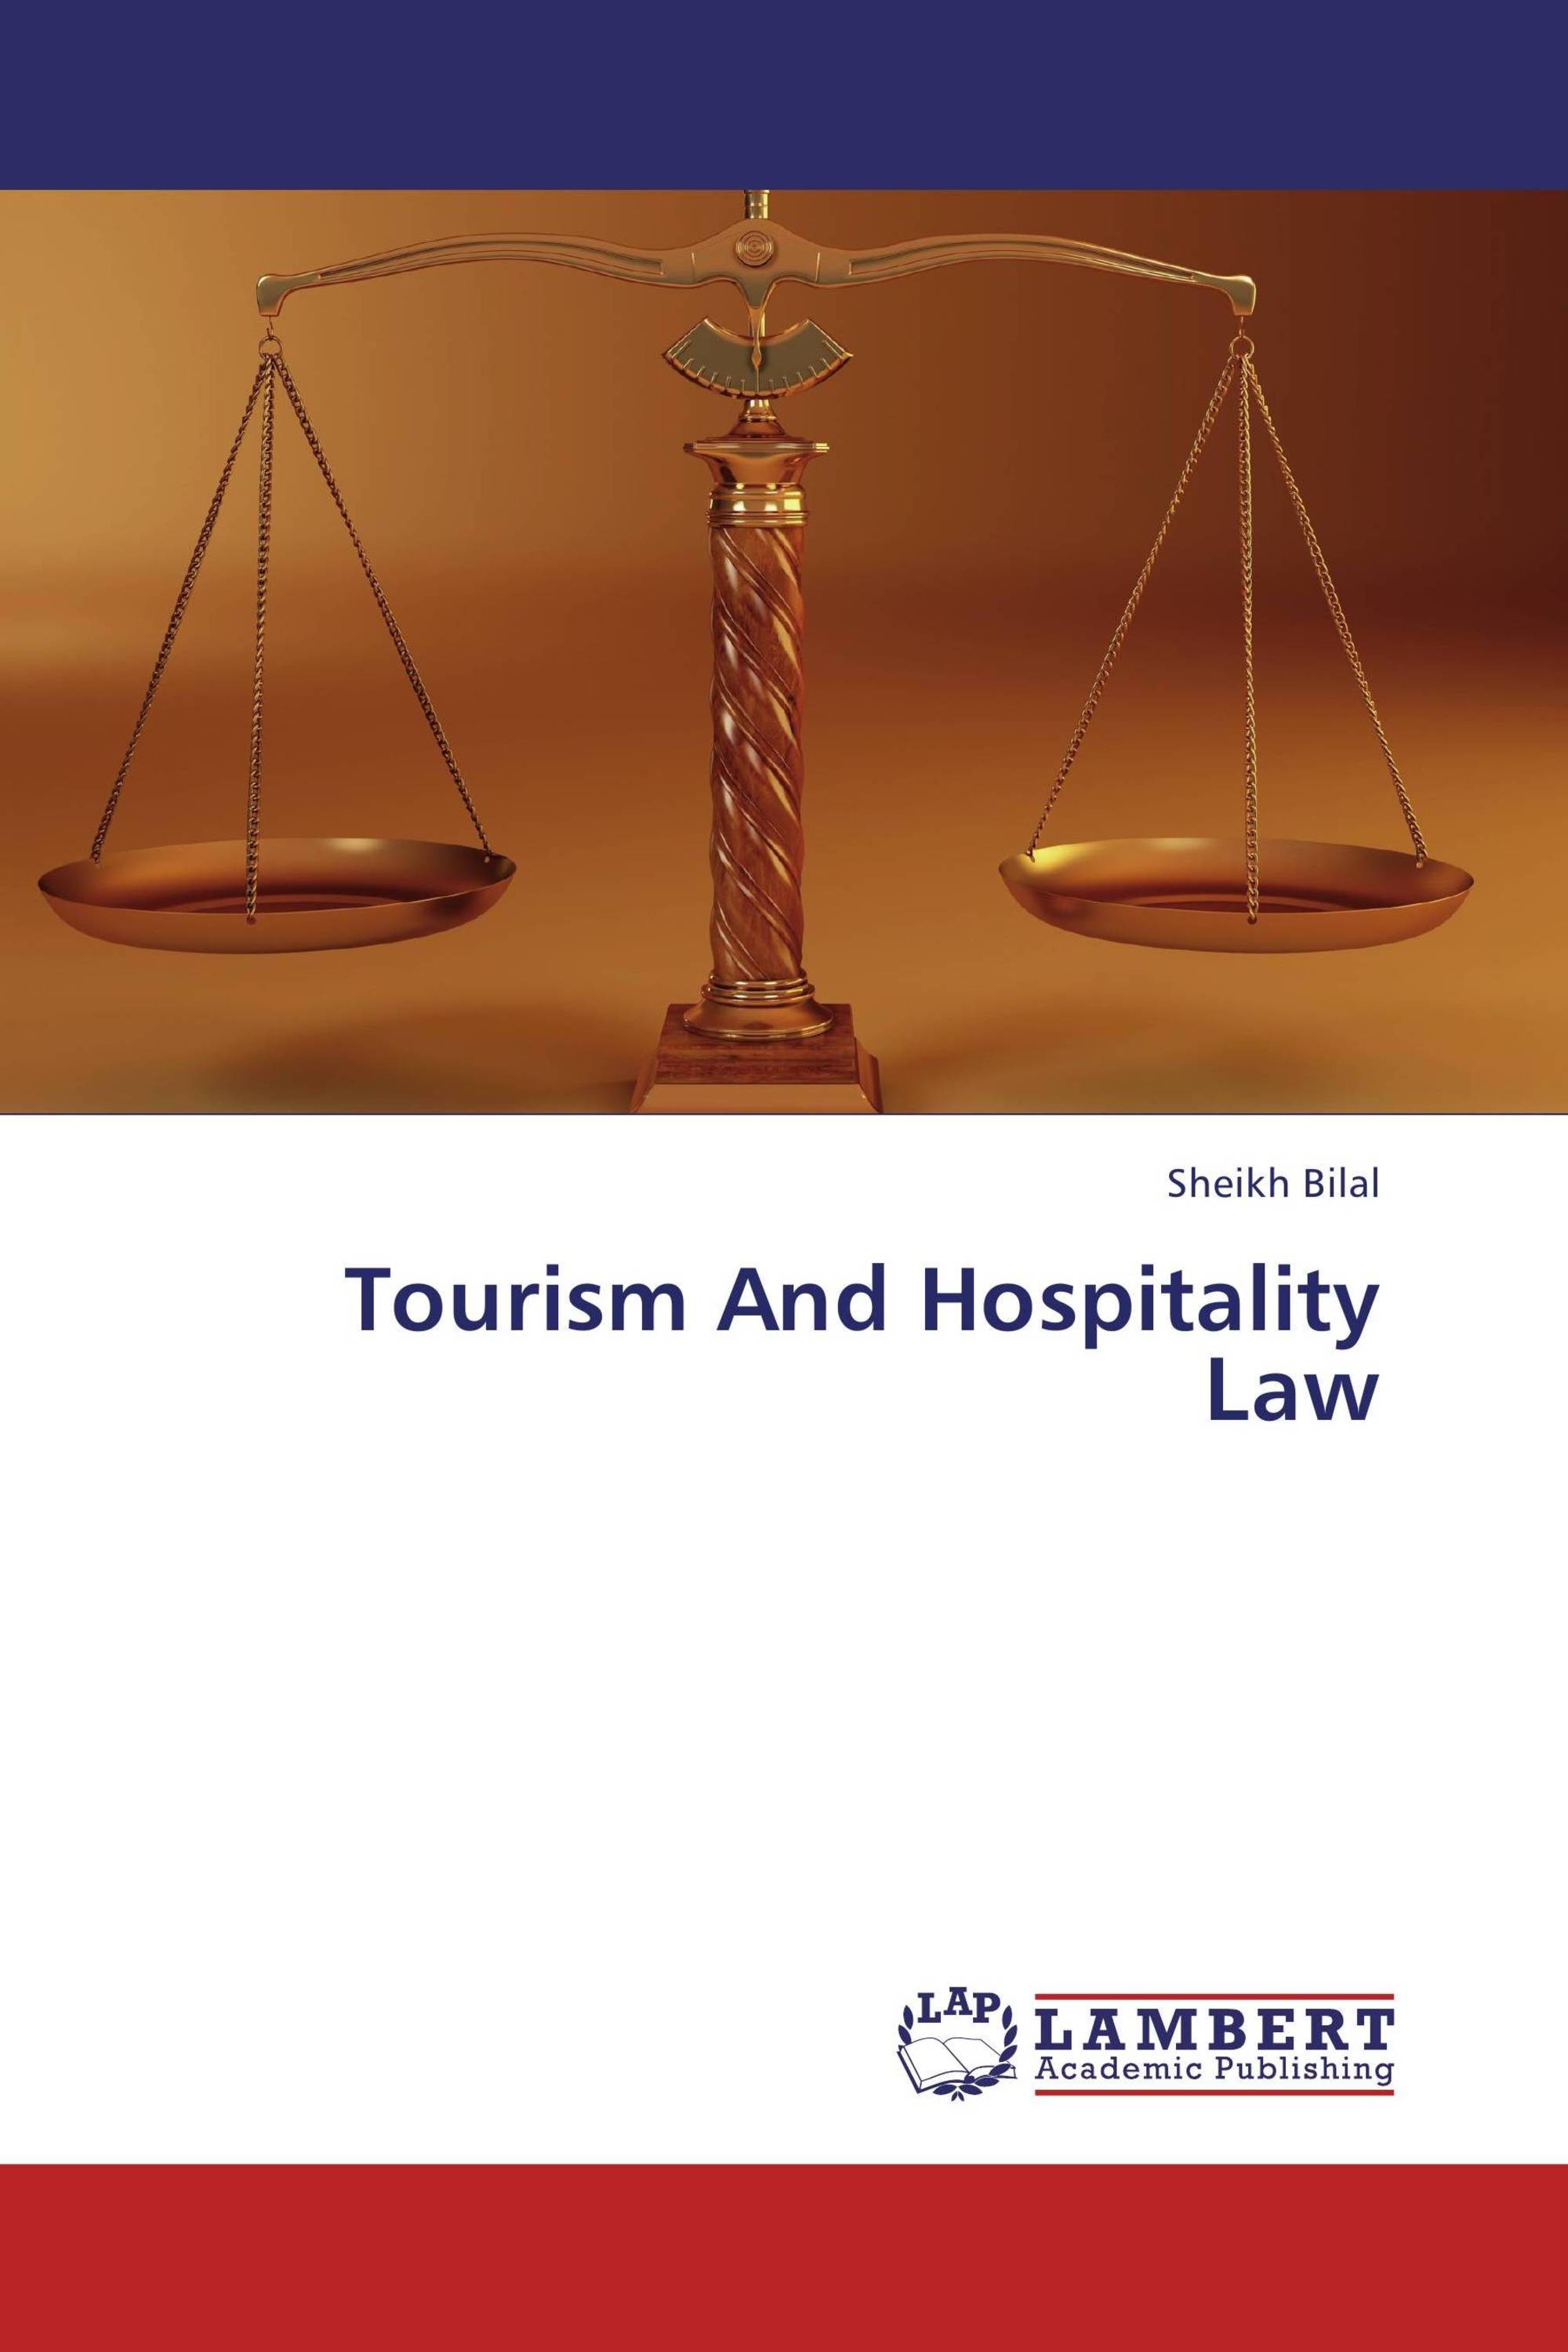 hospitality law case study